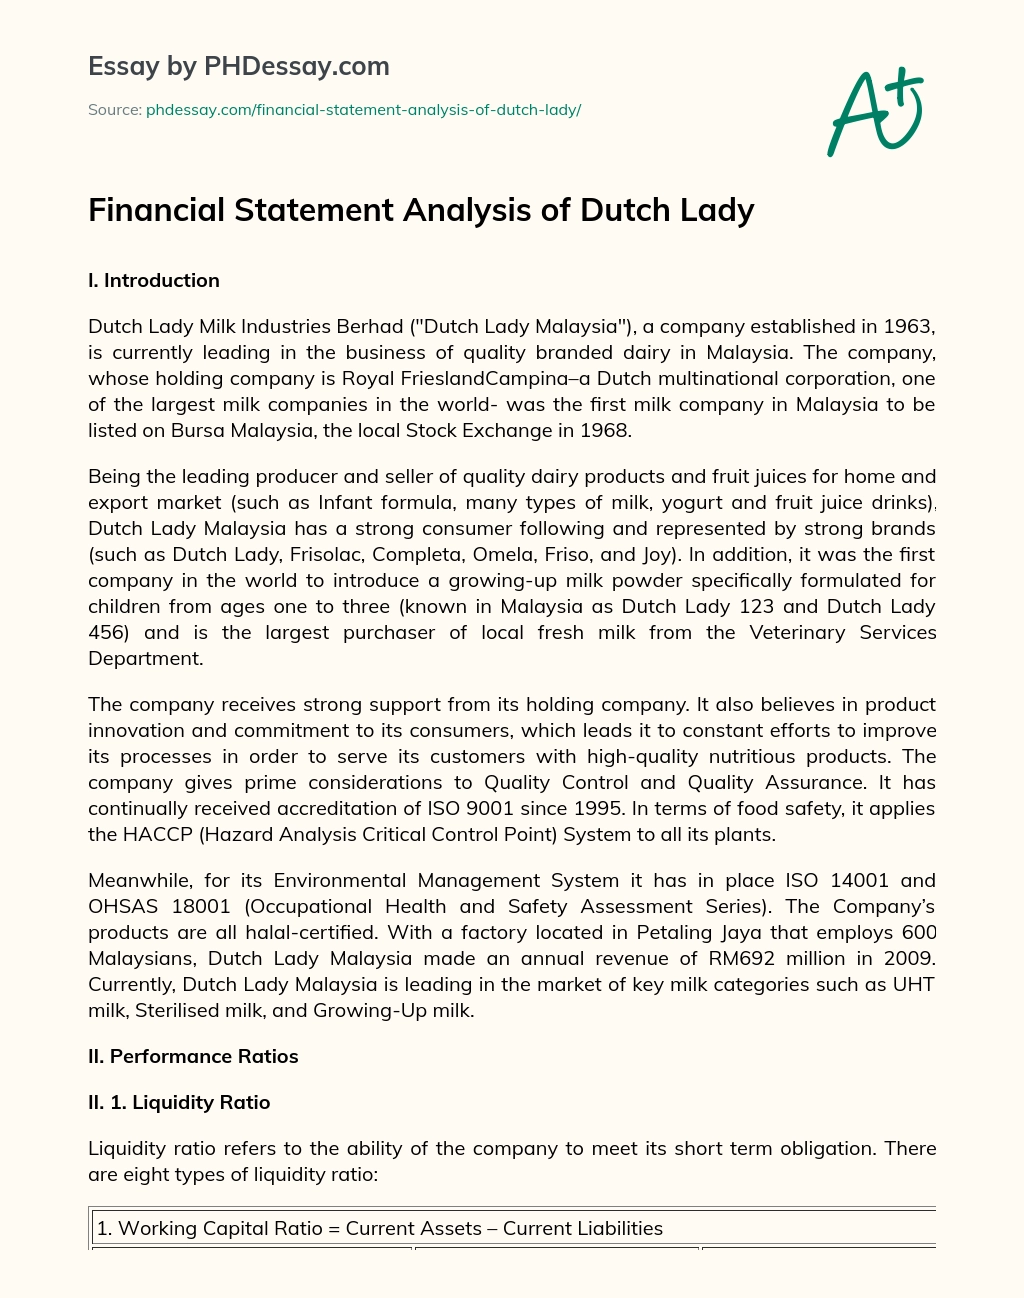 Financial Statement Analysis of Dutch Lady essay